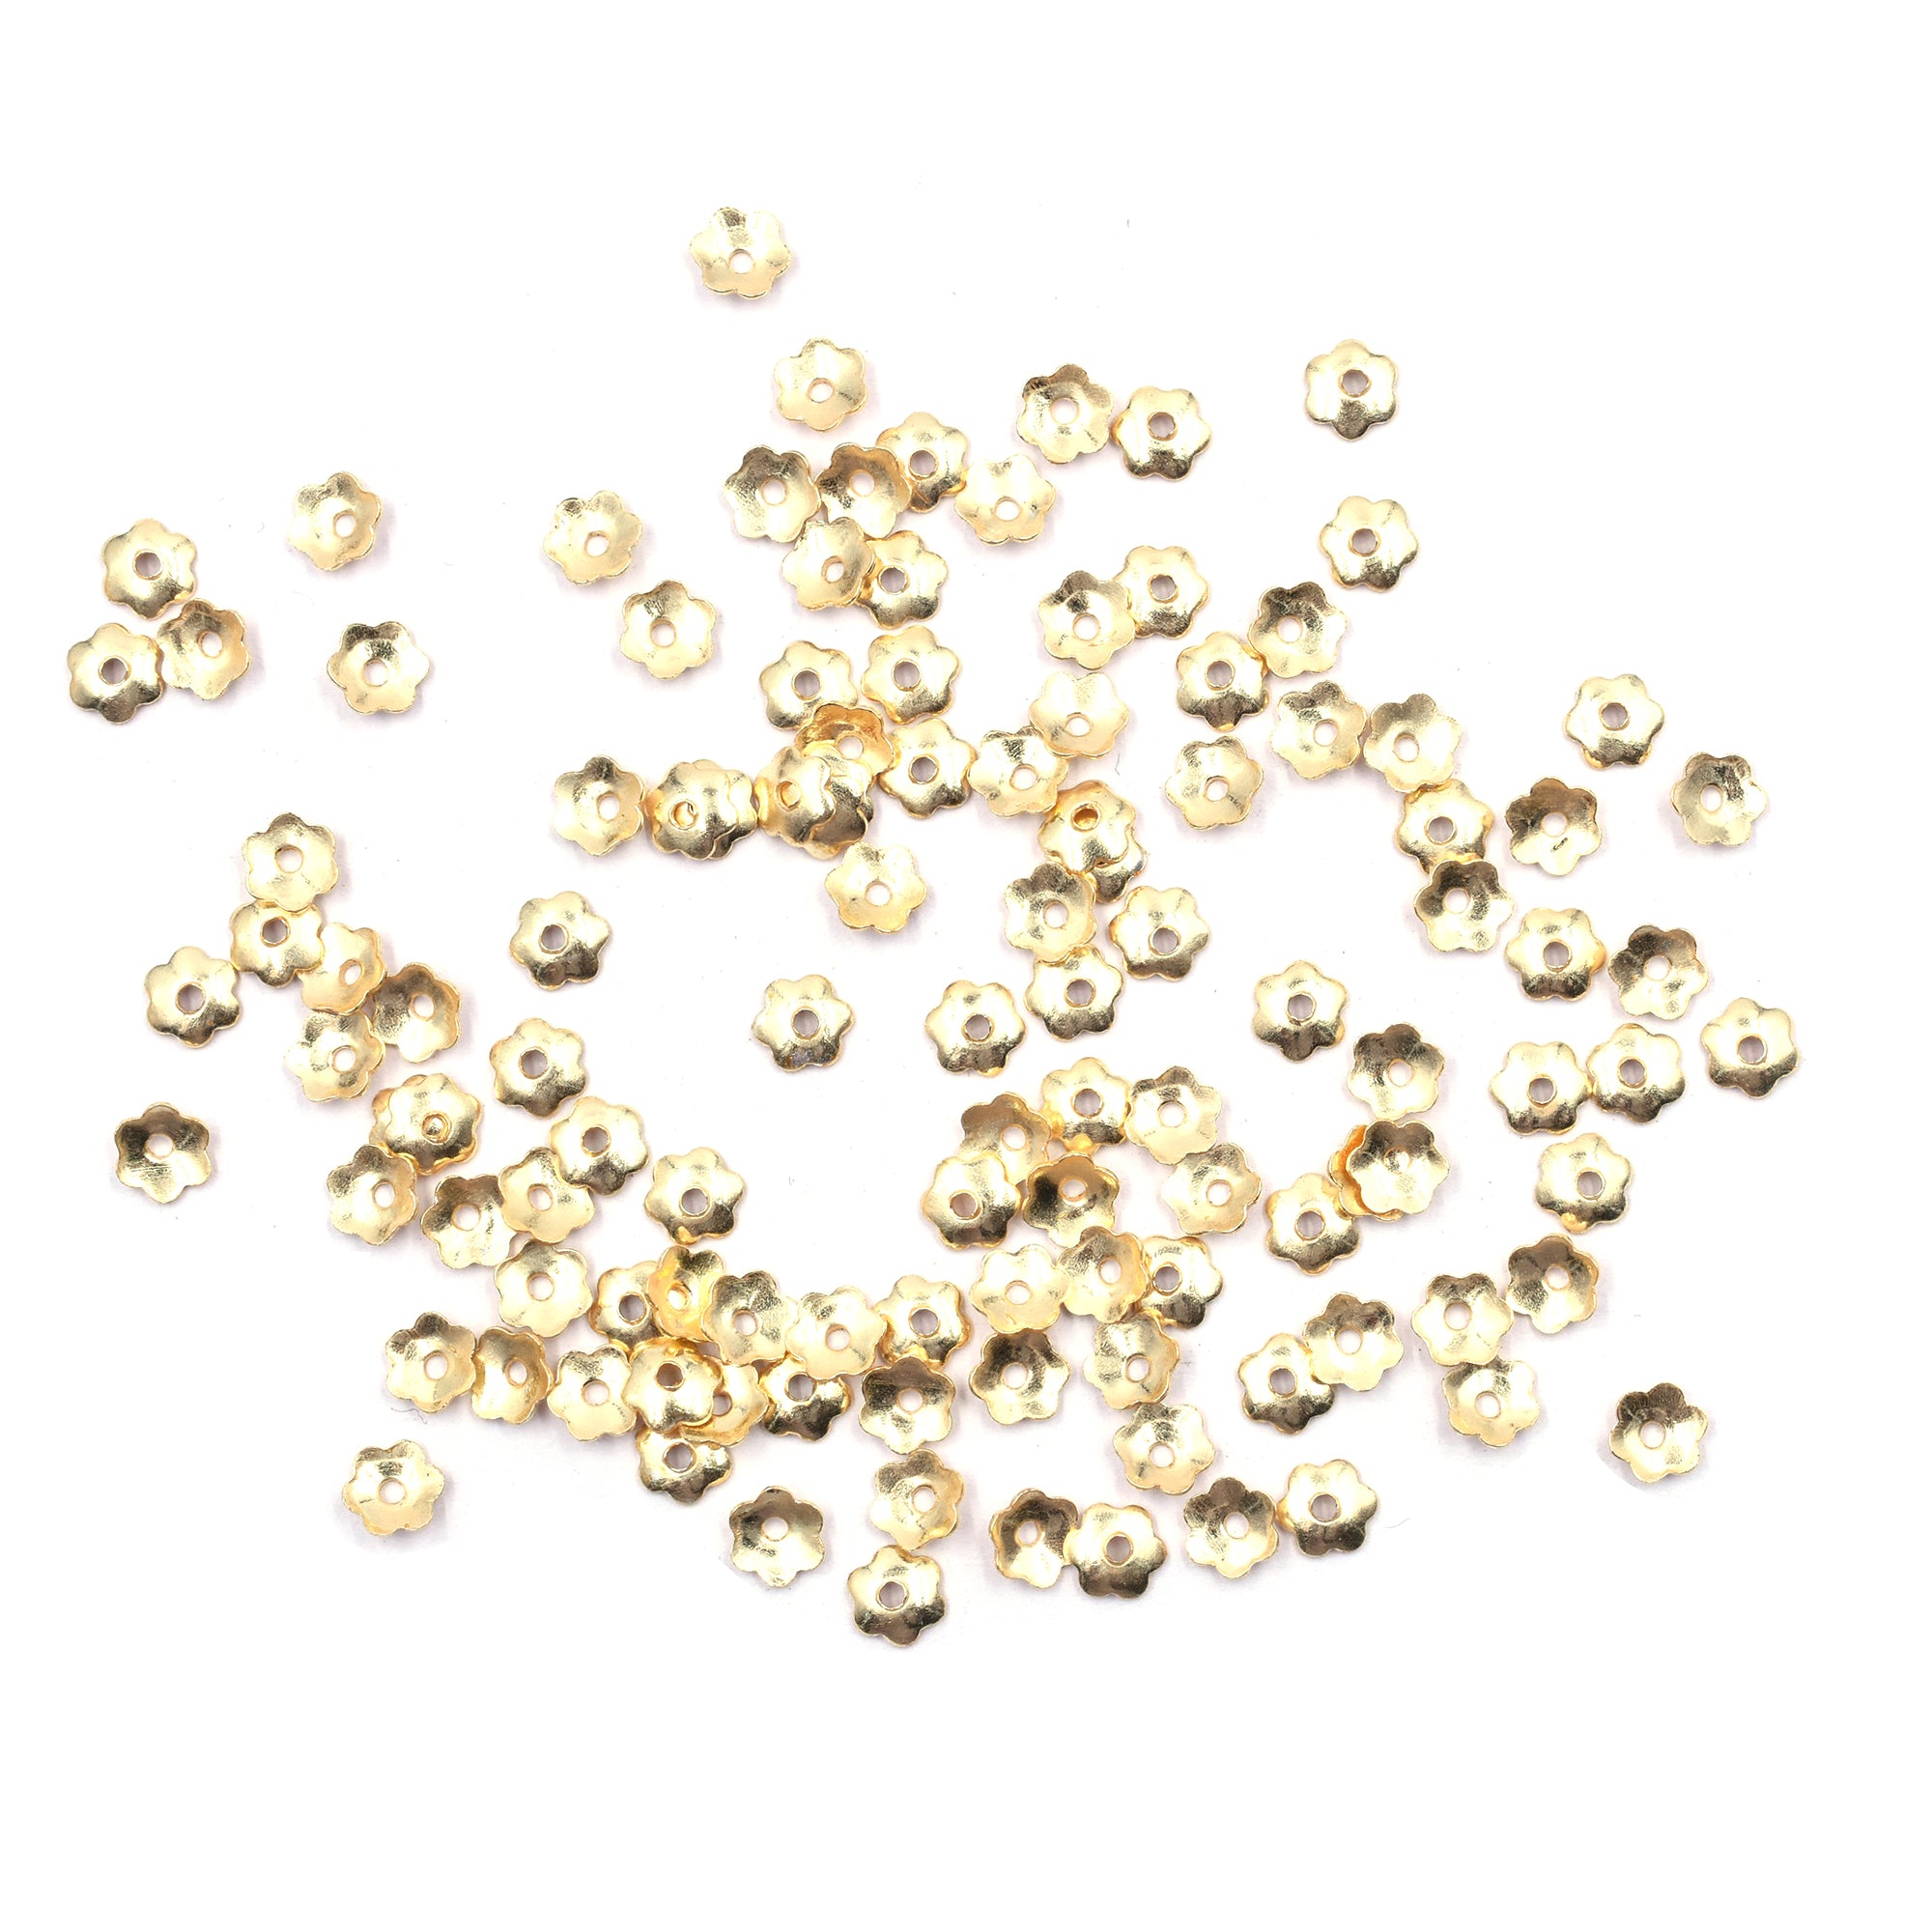 400 Pcs 5mm Half Cap Beads Gold Plated Copper